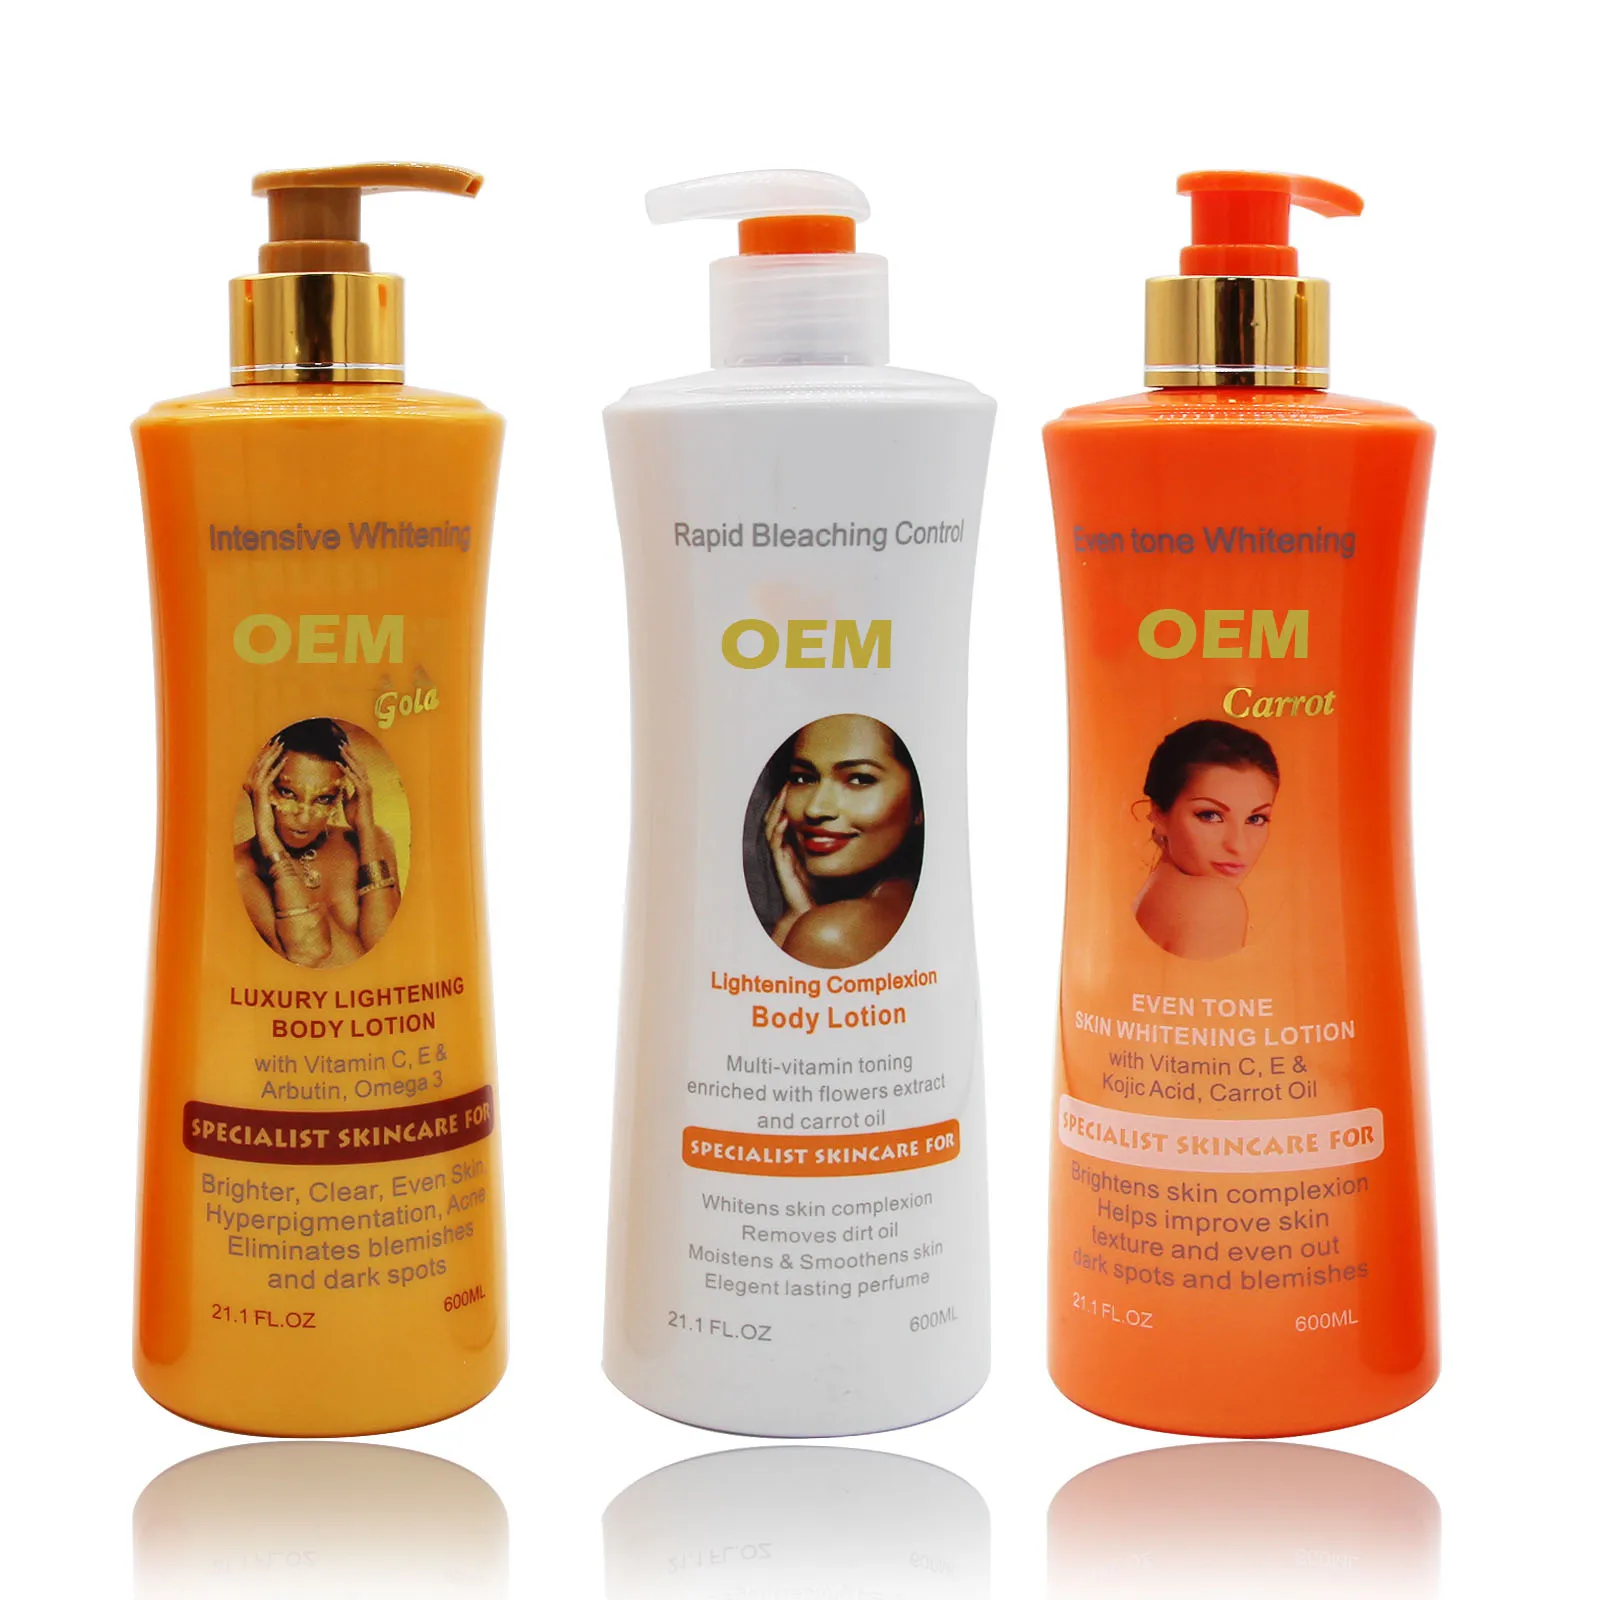 BIO  Carrot Oil with Vitamin C Brightens skin tone improves texture removes dark spots body lotion 600ml